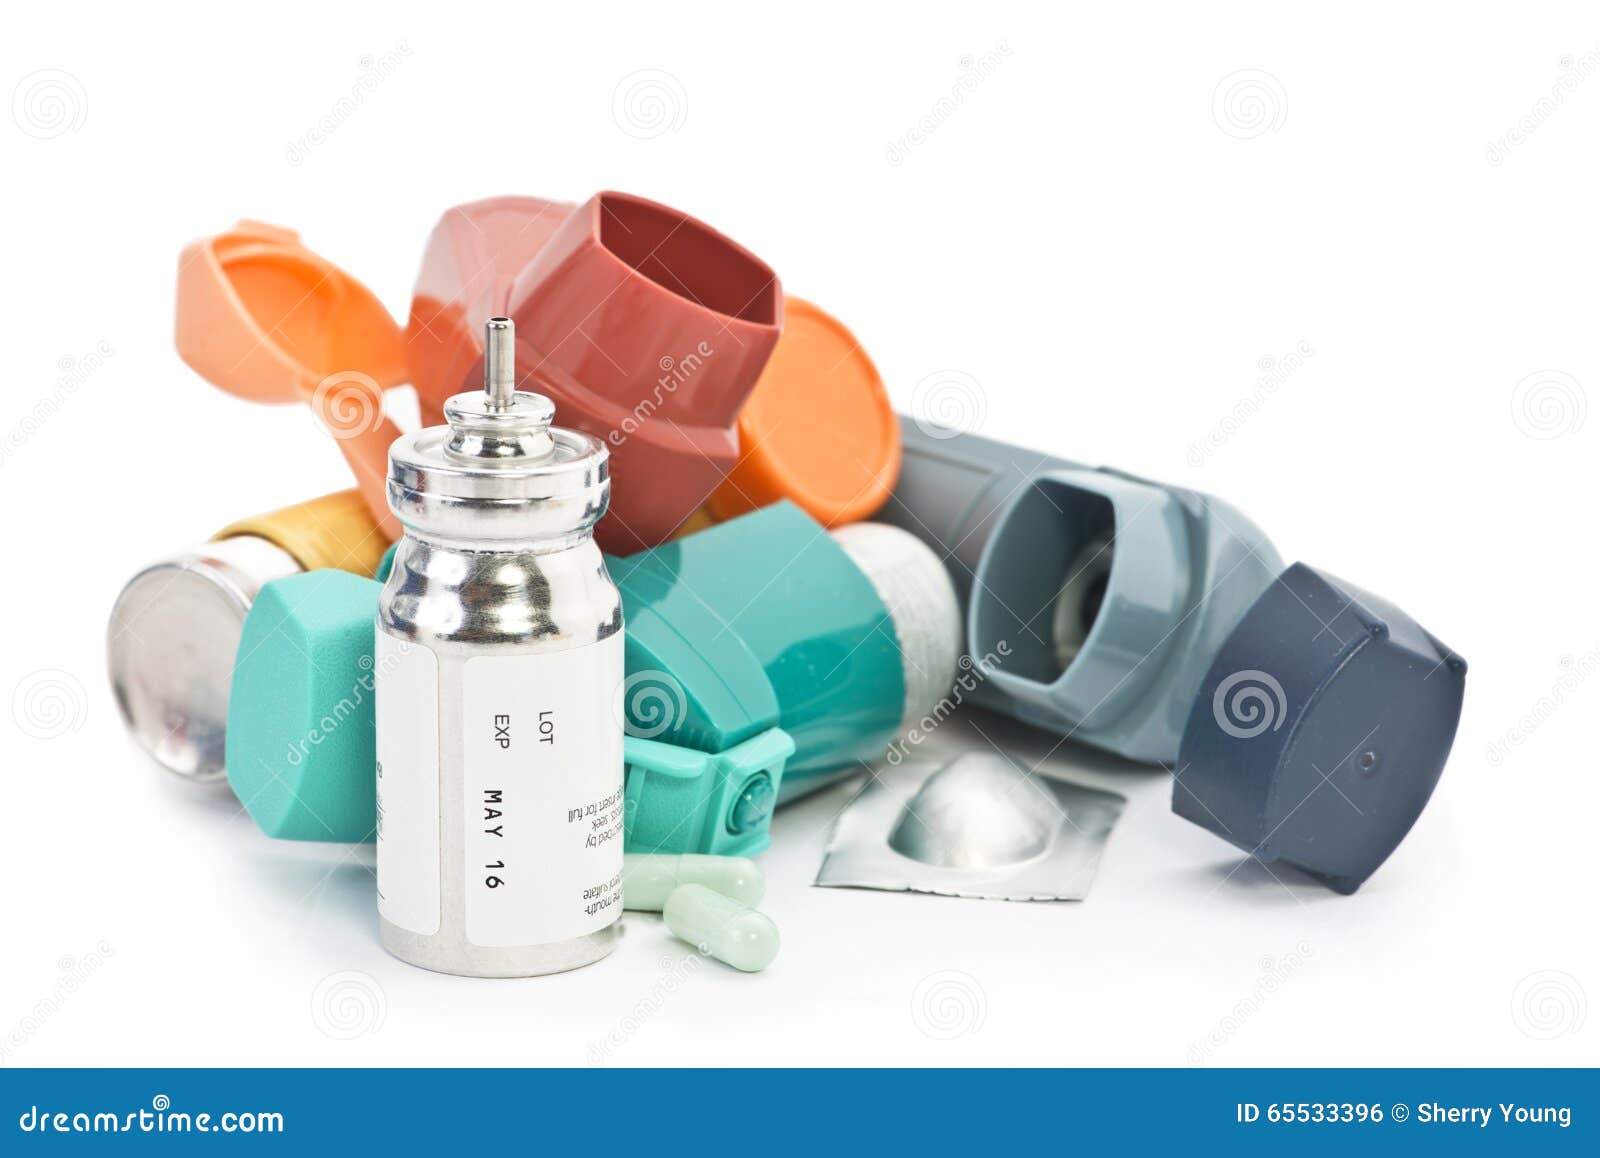 asthma treatment